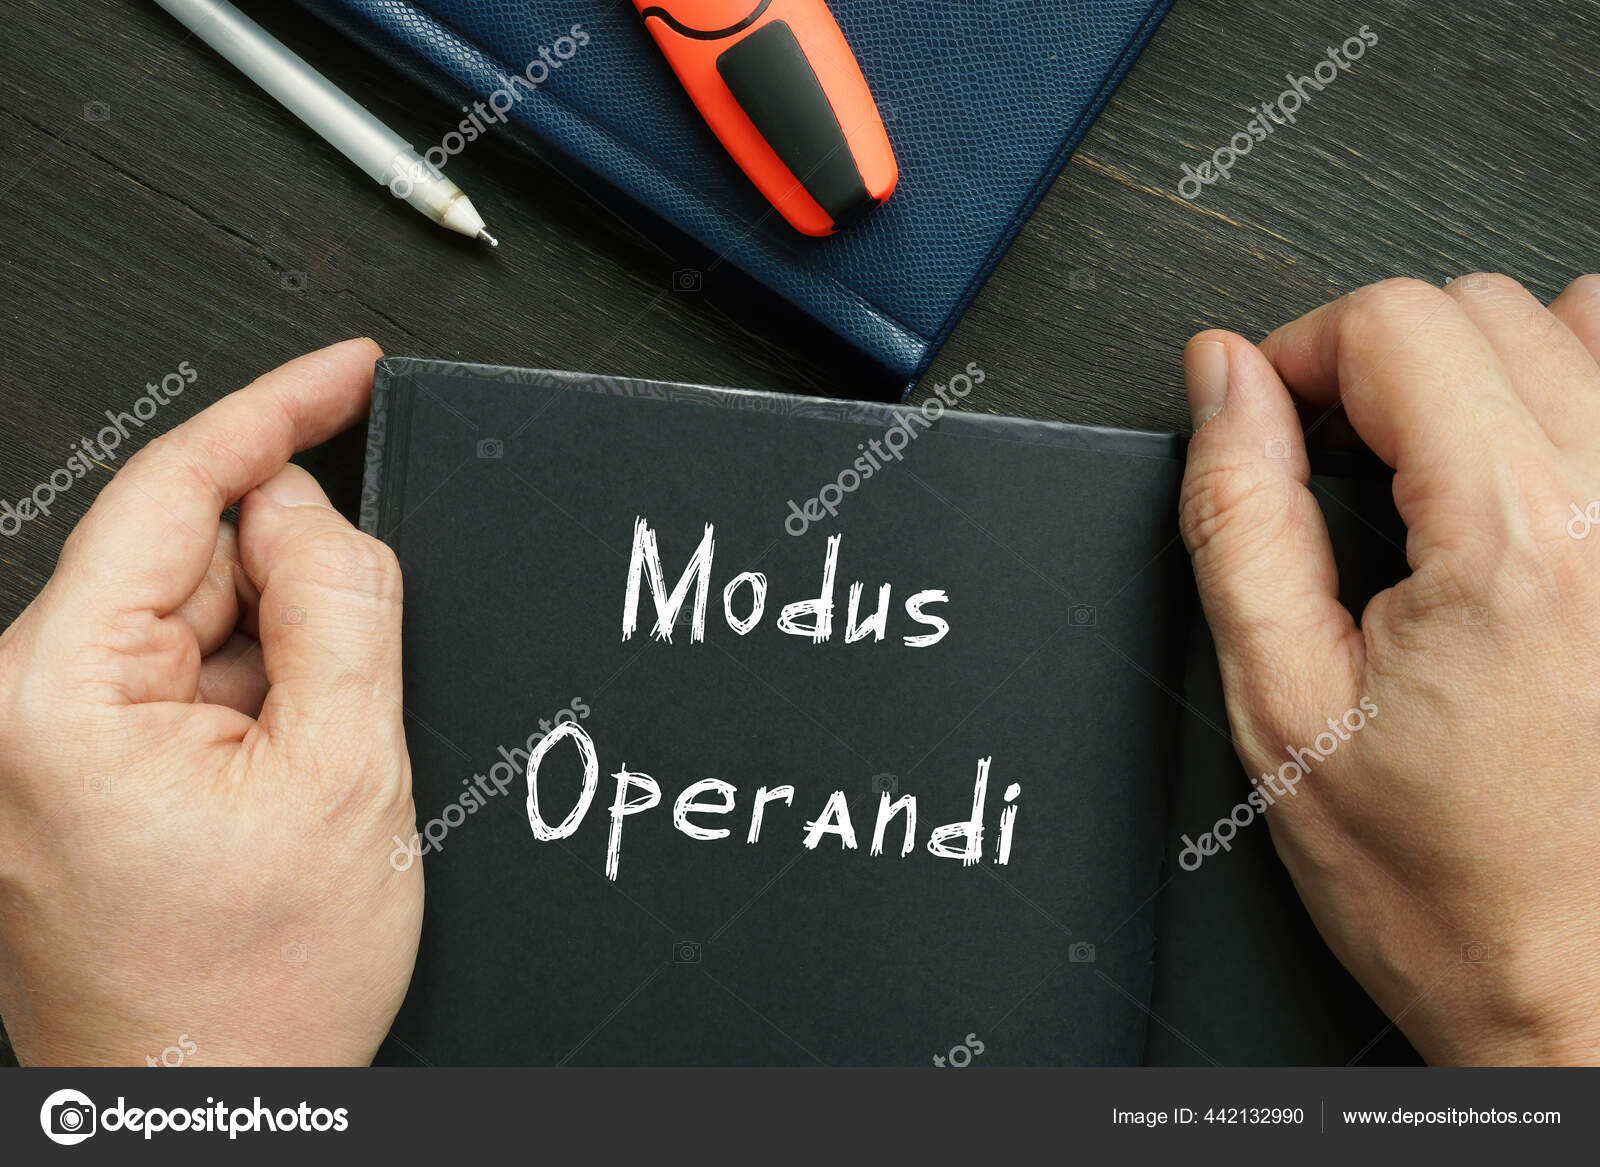 Operandi meaning modus